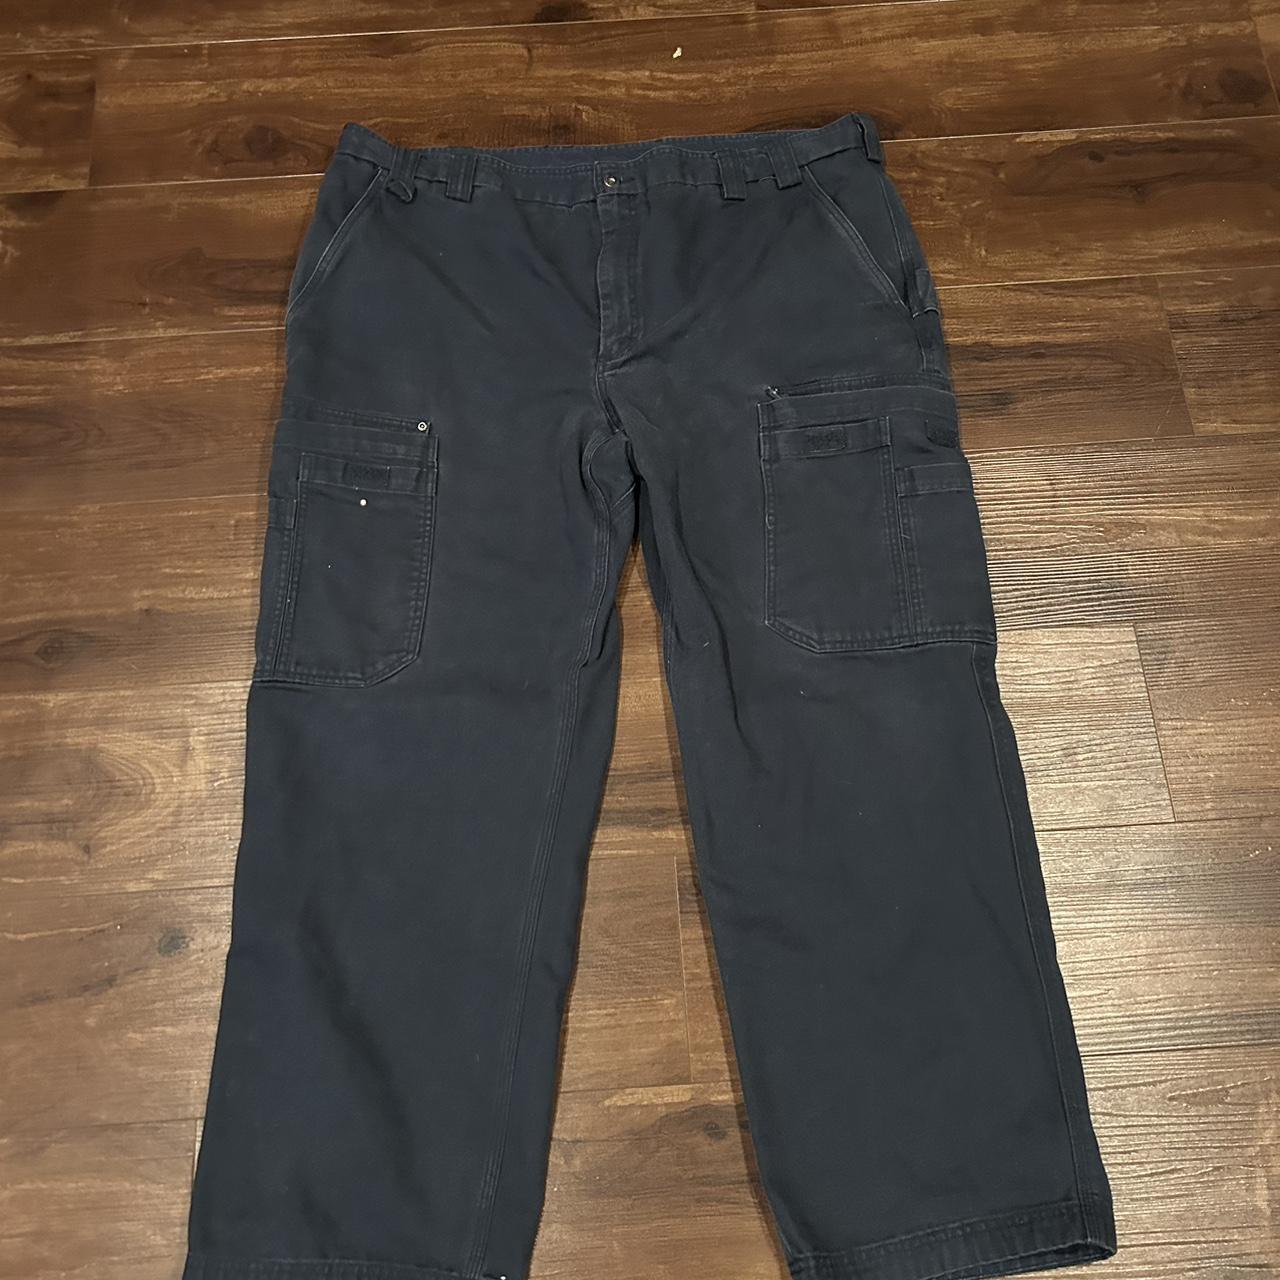 Duluth Trading cargo pants Navy blue 46x32 - Depop